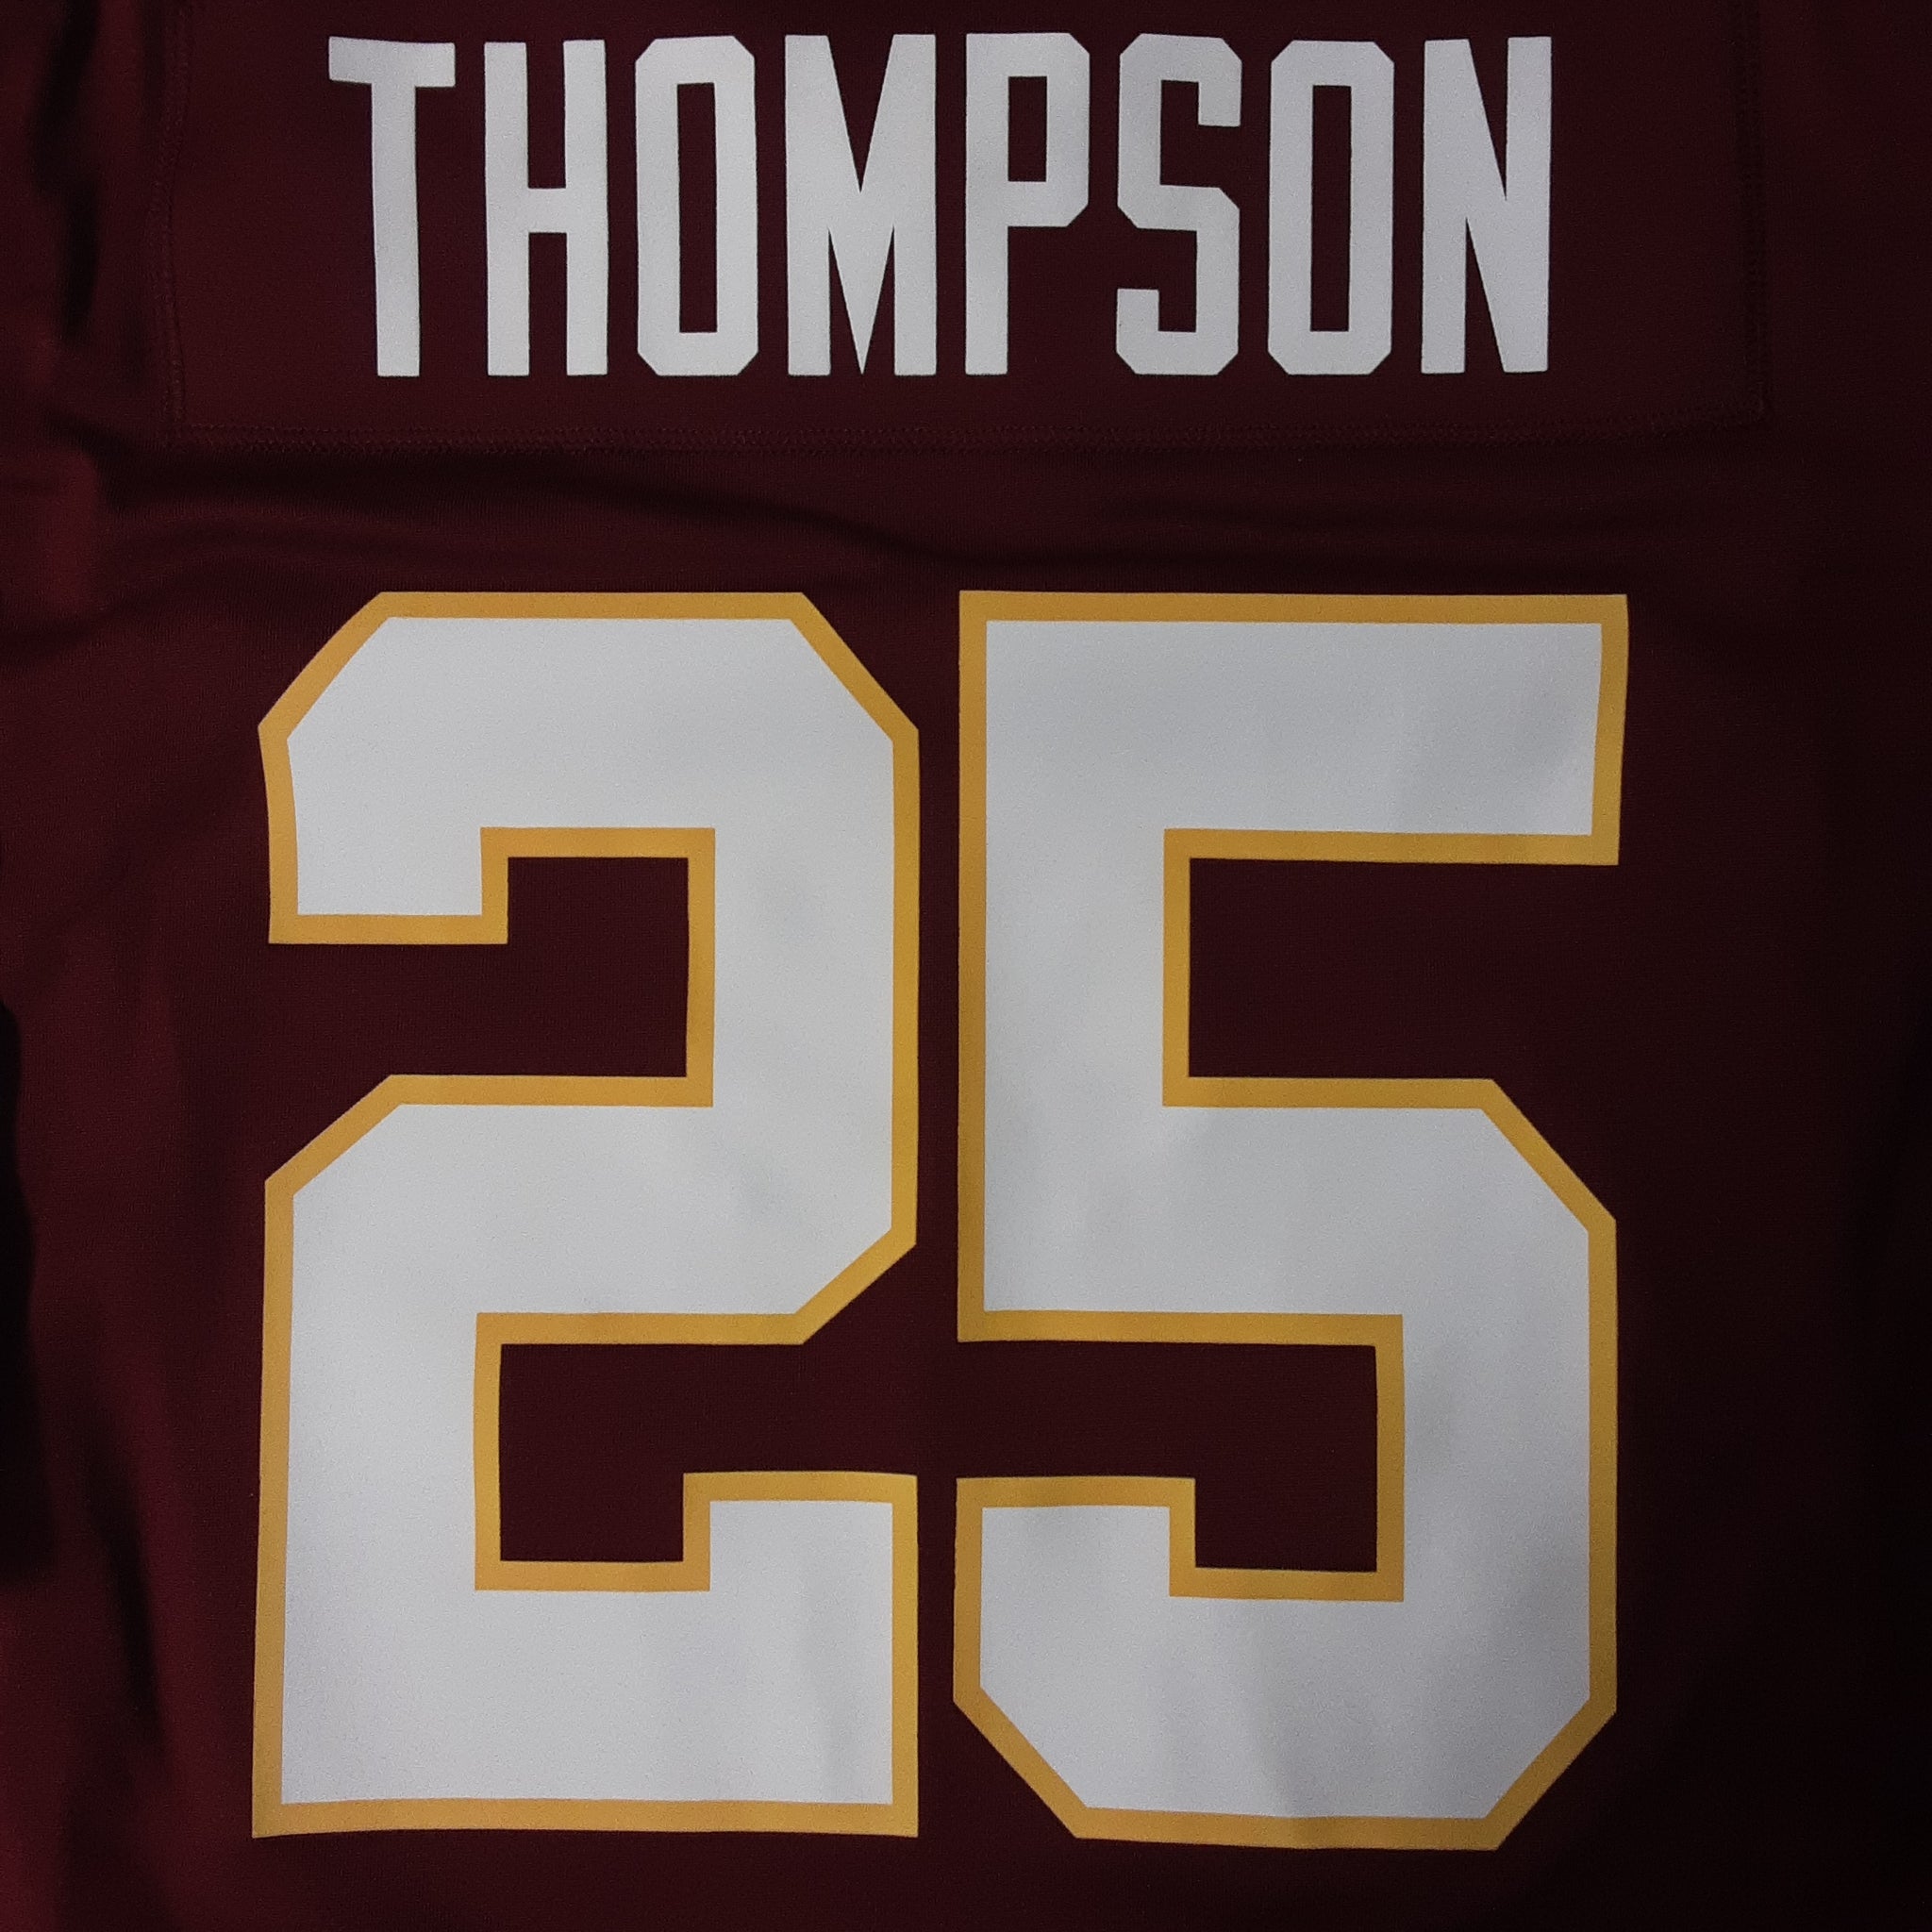 Chris Thompson Authentic Signed Pro Style Jersey Autographed JSA-